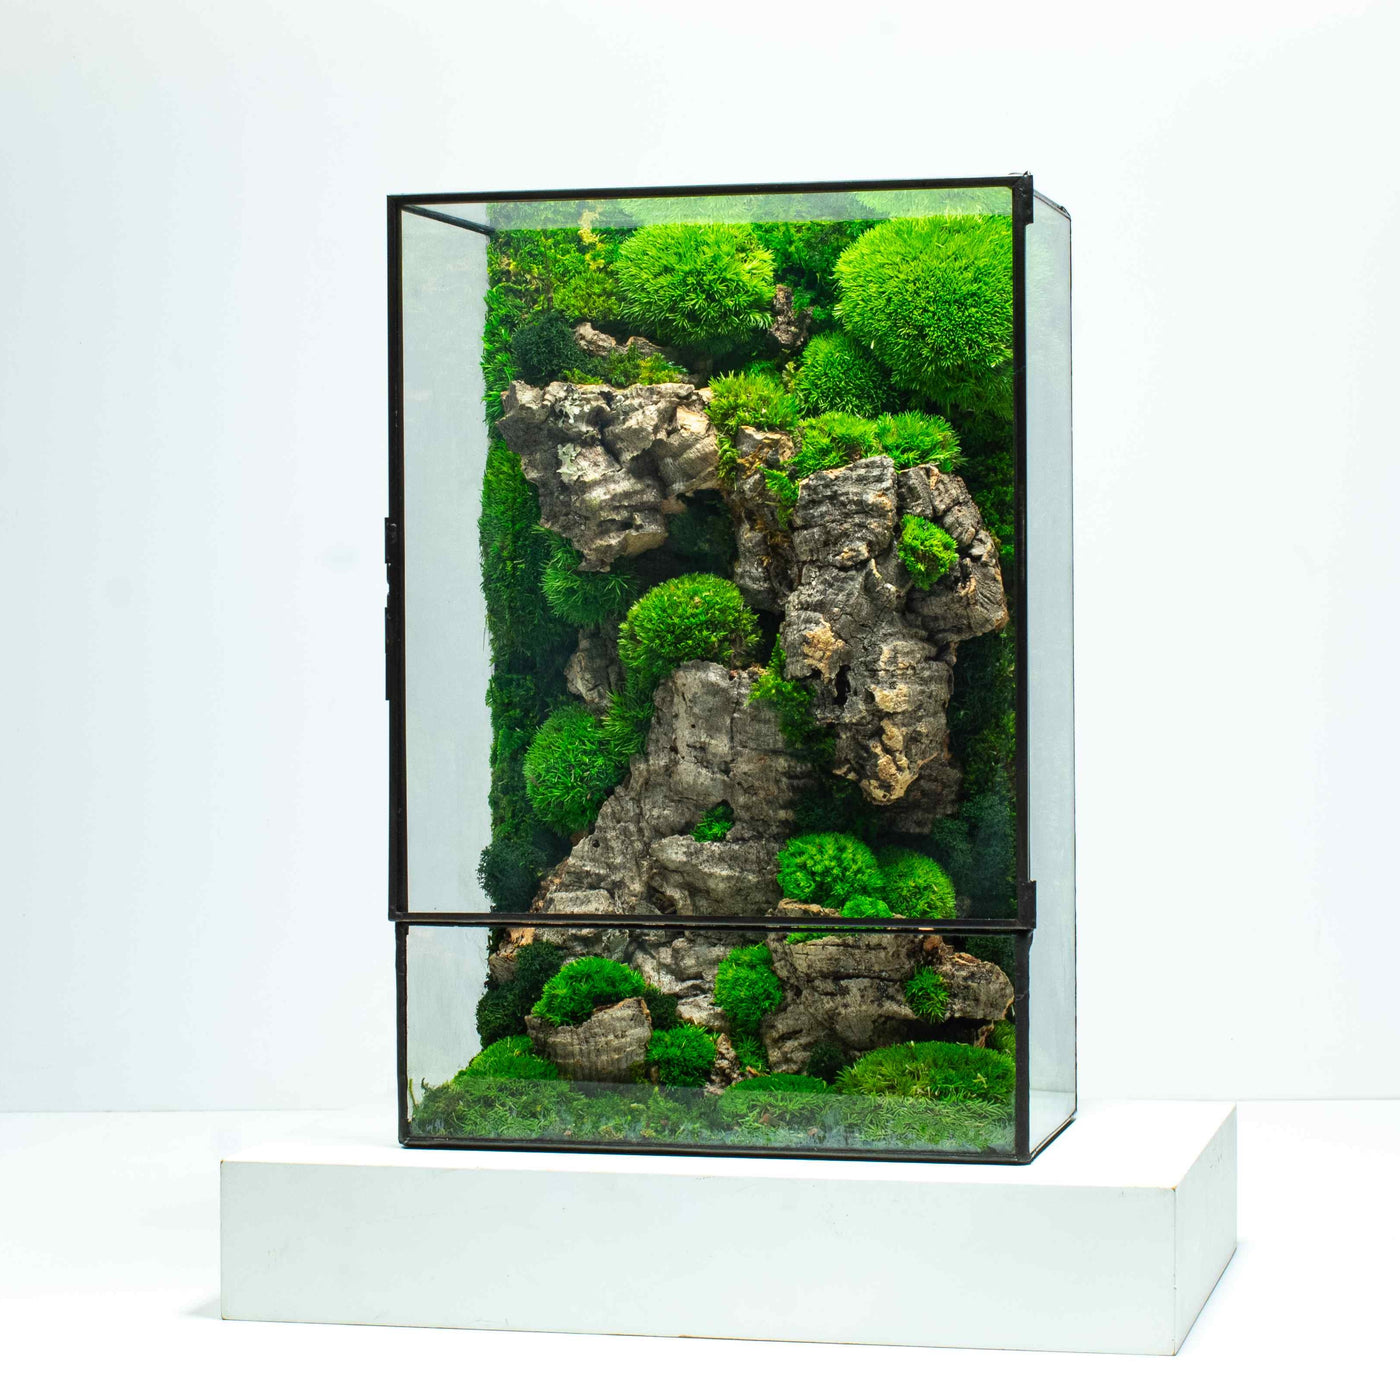 Geometric terrarium with the Moss Box: Zero maintenance, vibrant greenery.